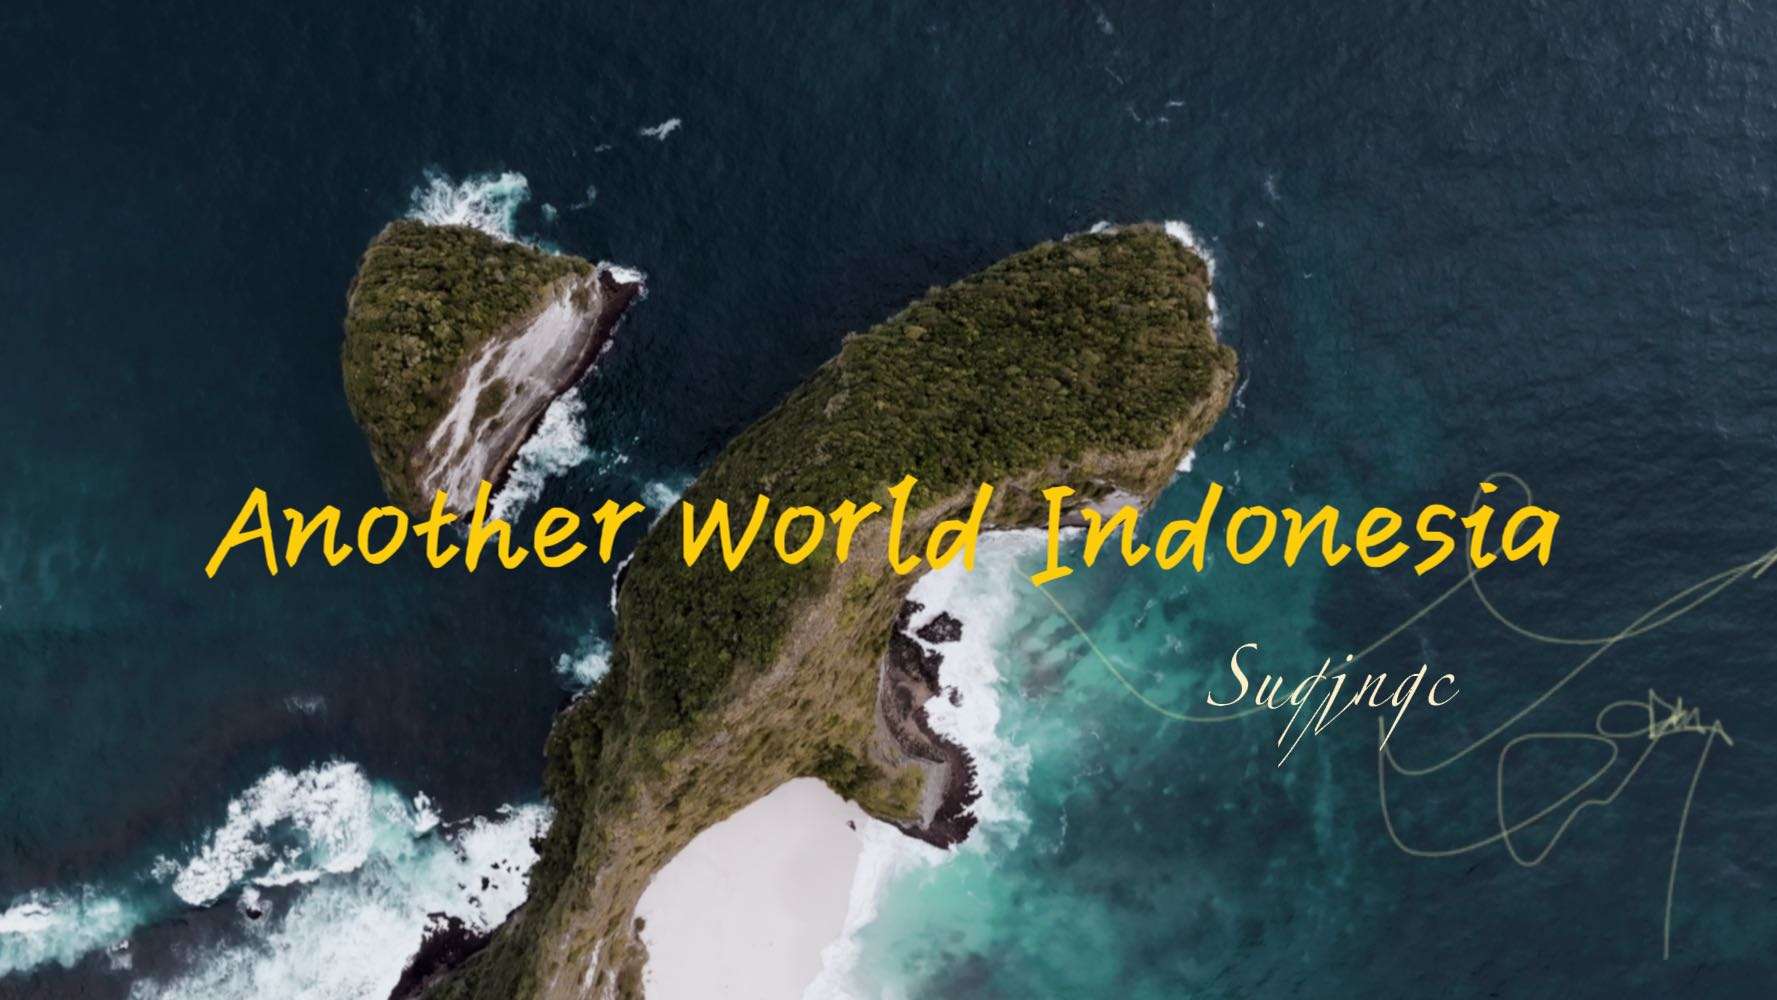 4K印度尼西亚旅拍｜Another world Indonesia